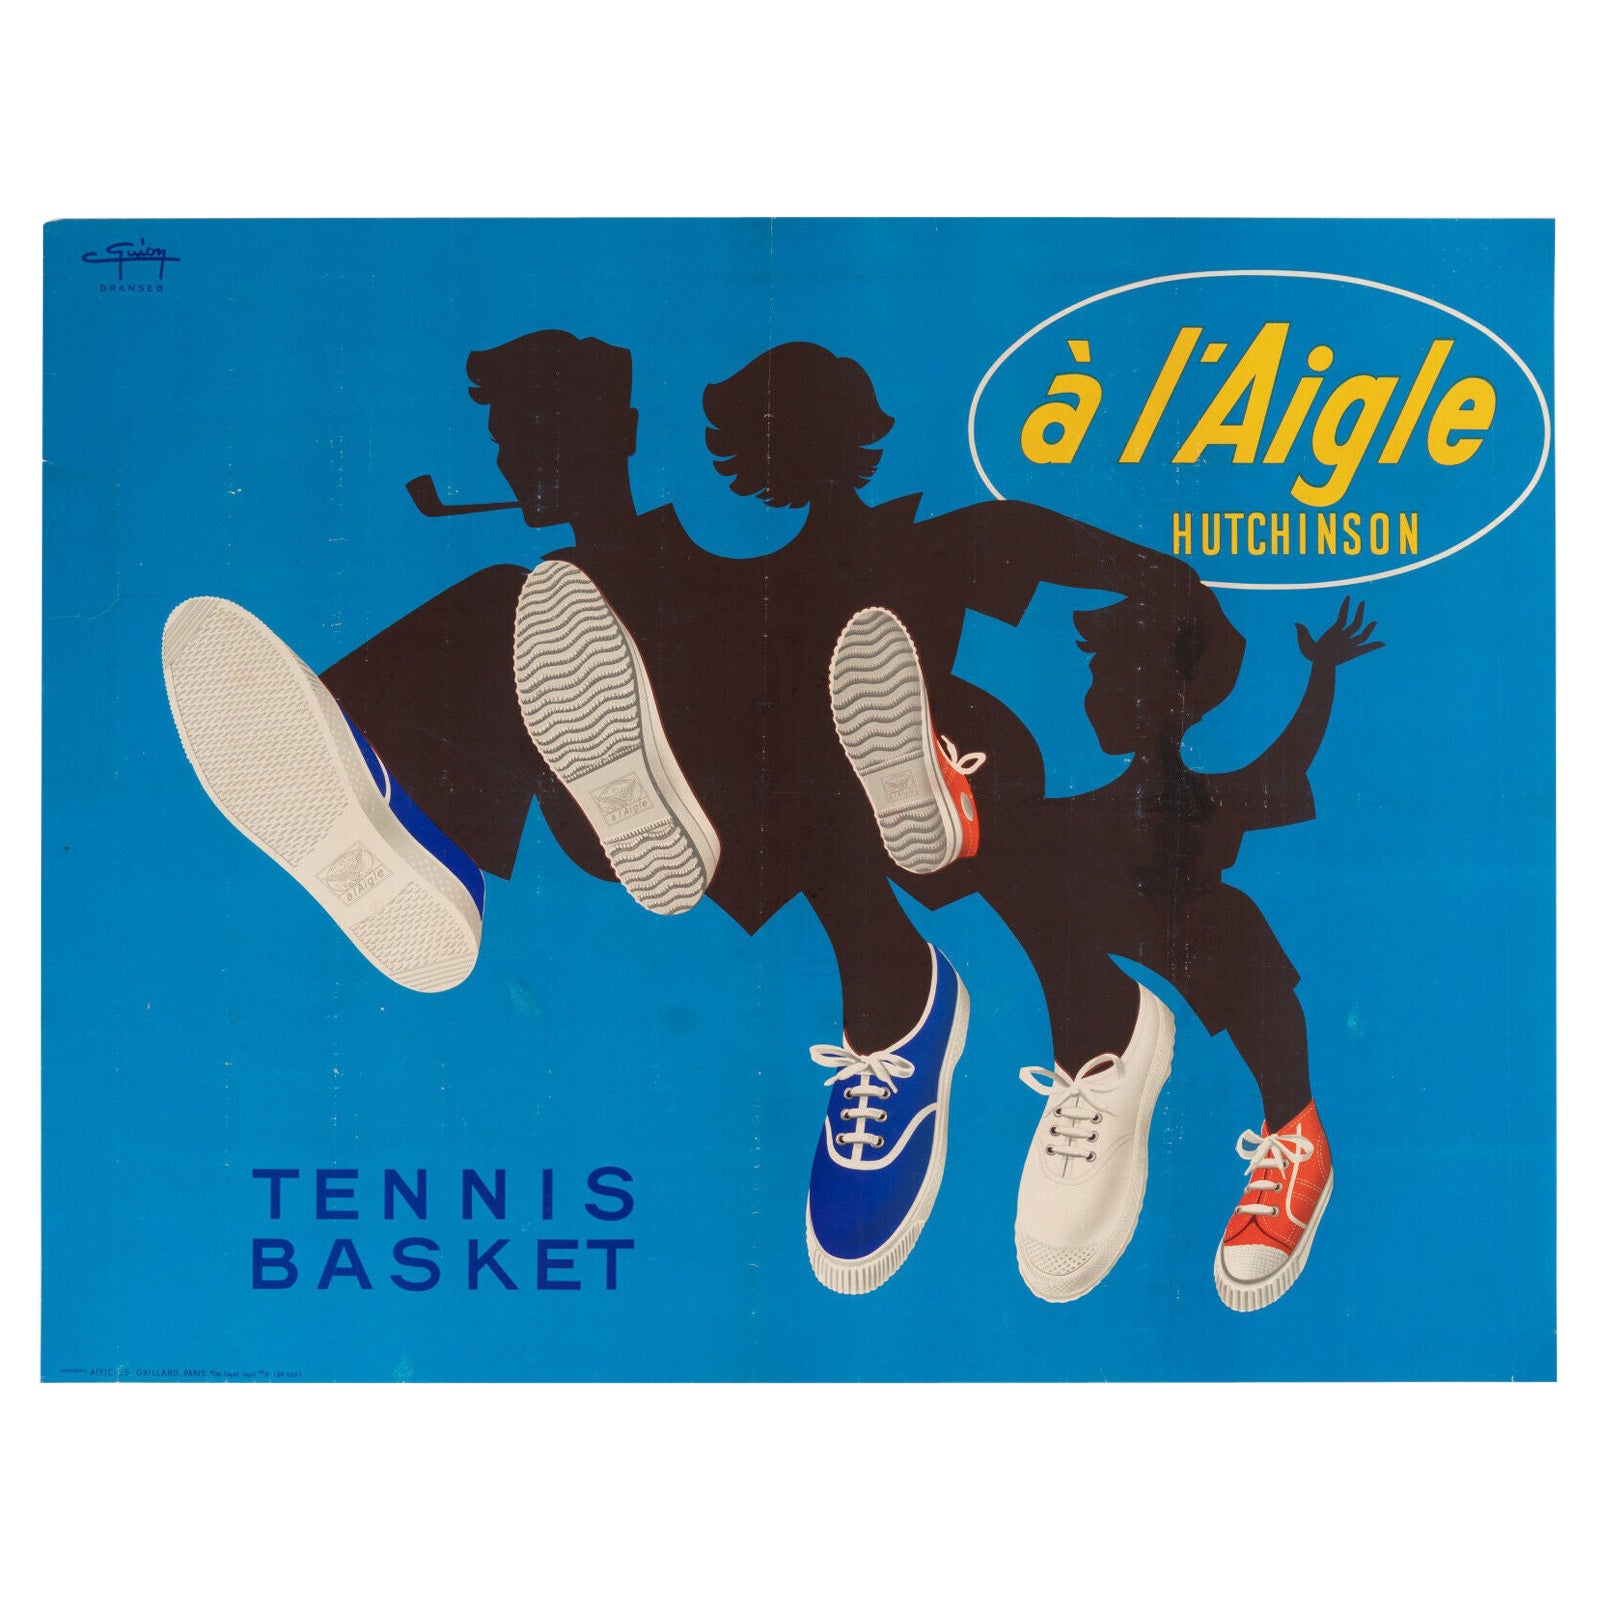 Original-Vintage-Poster, Hutchinson, Tennis, Basketball, Turnschuhe, 1950